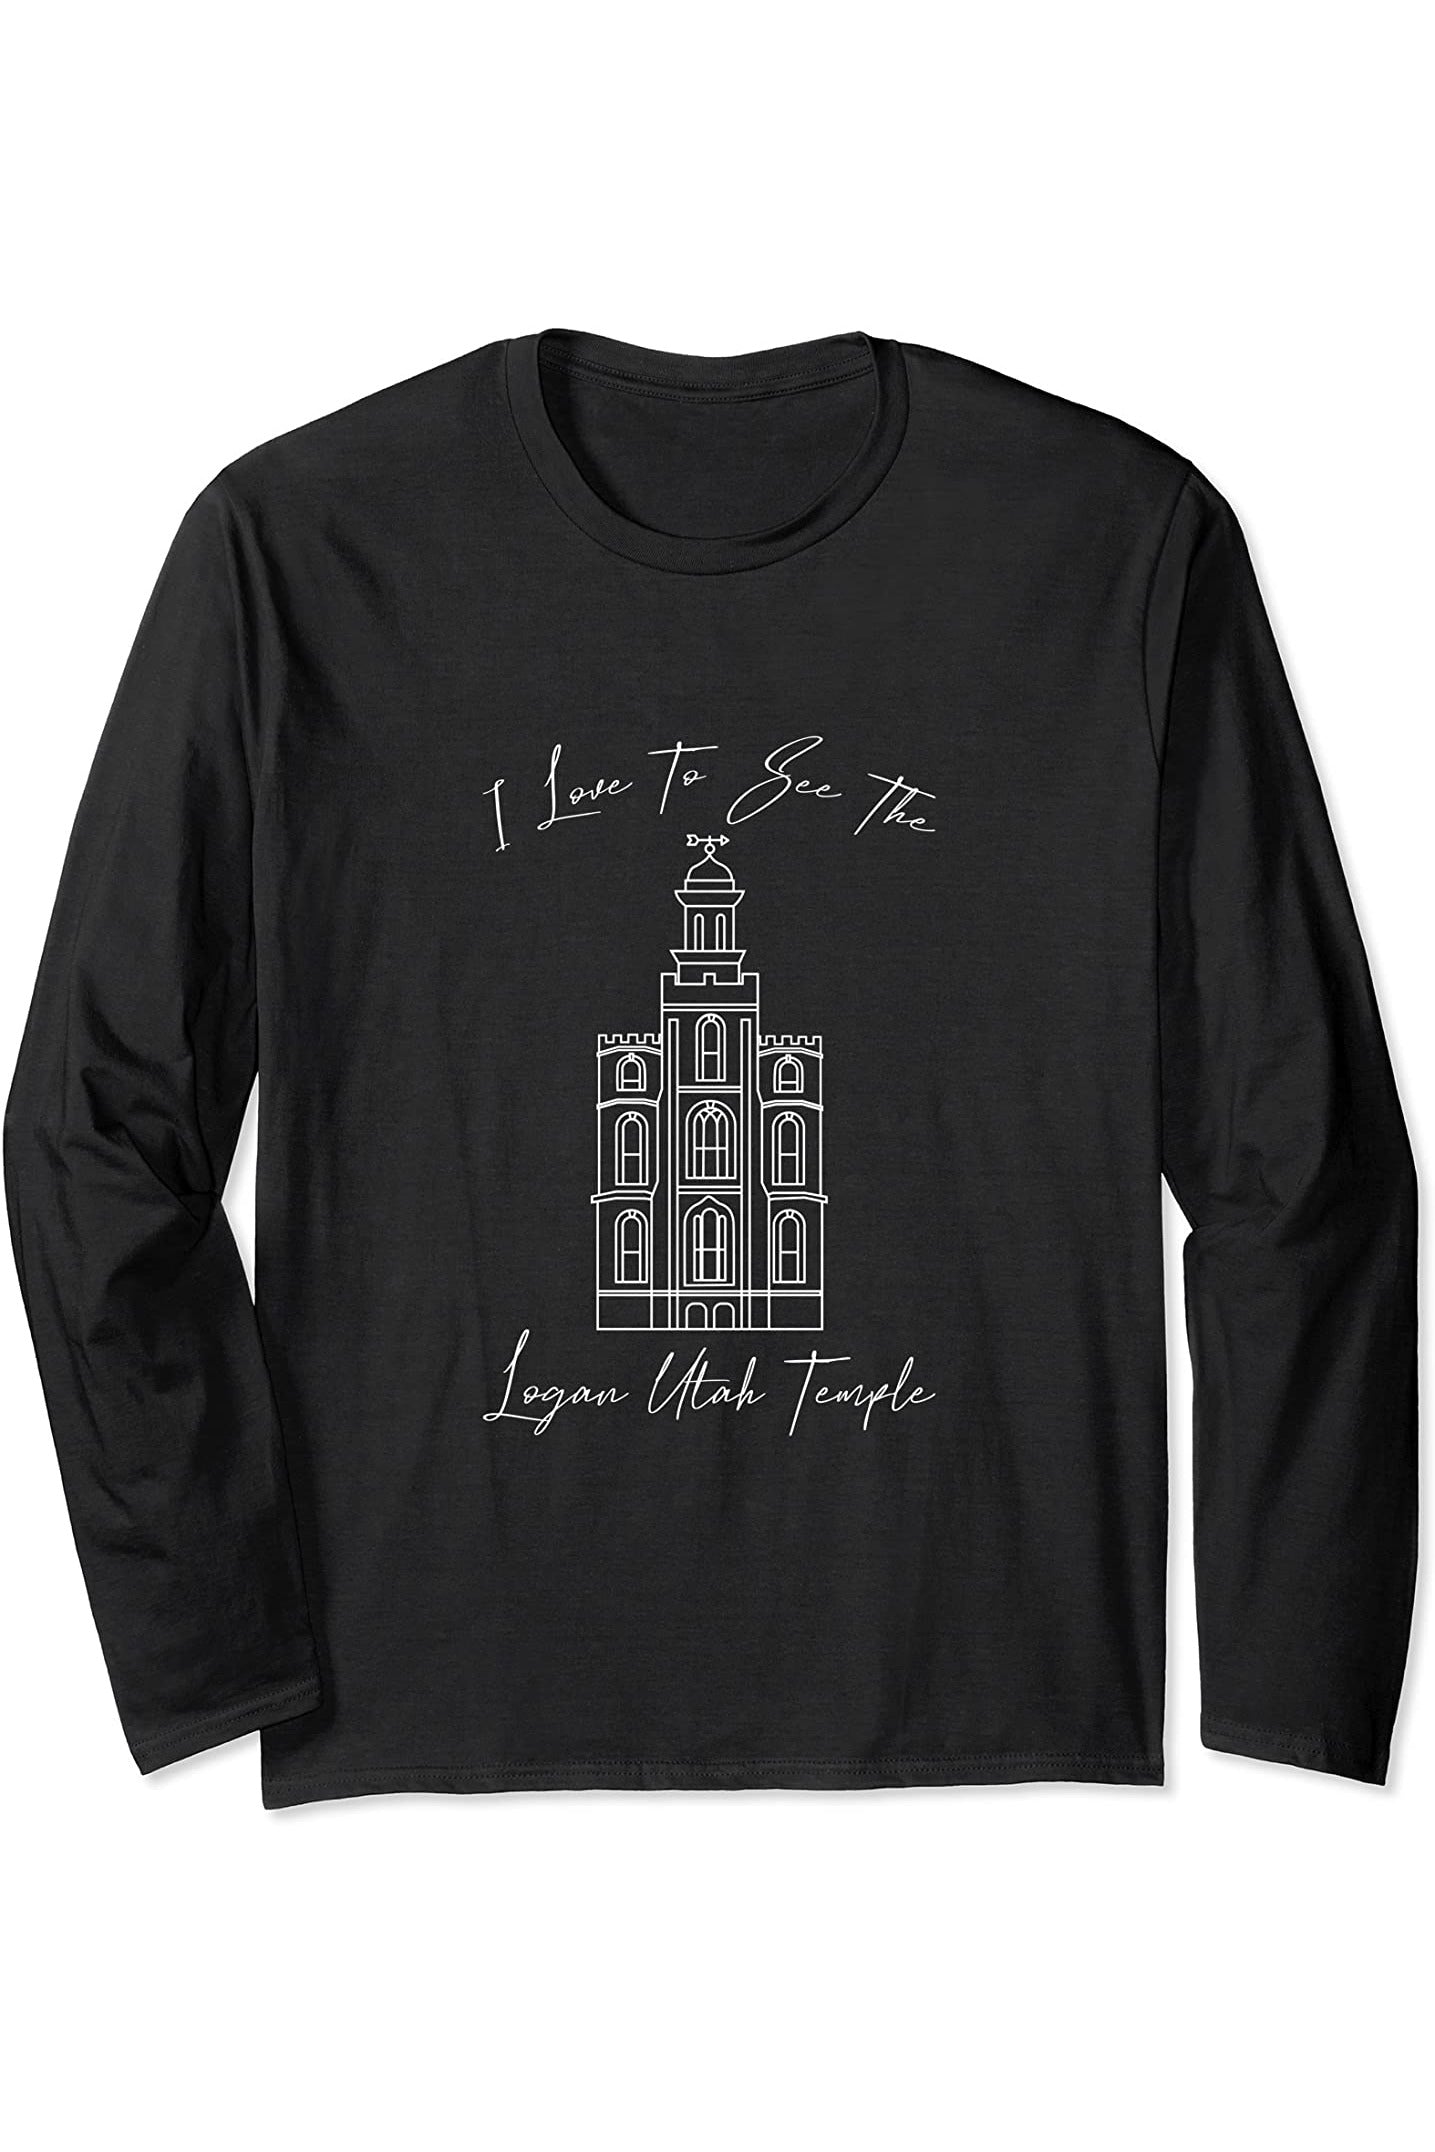 Logan Utah Temple Long Sleeve T-Shirt - Calligraphy Style (English) US